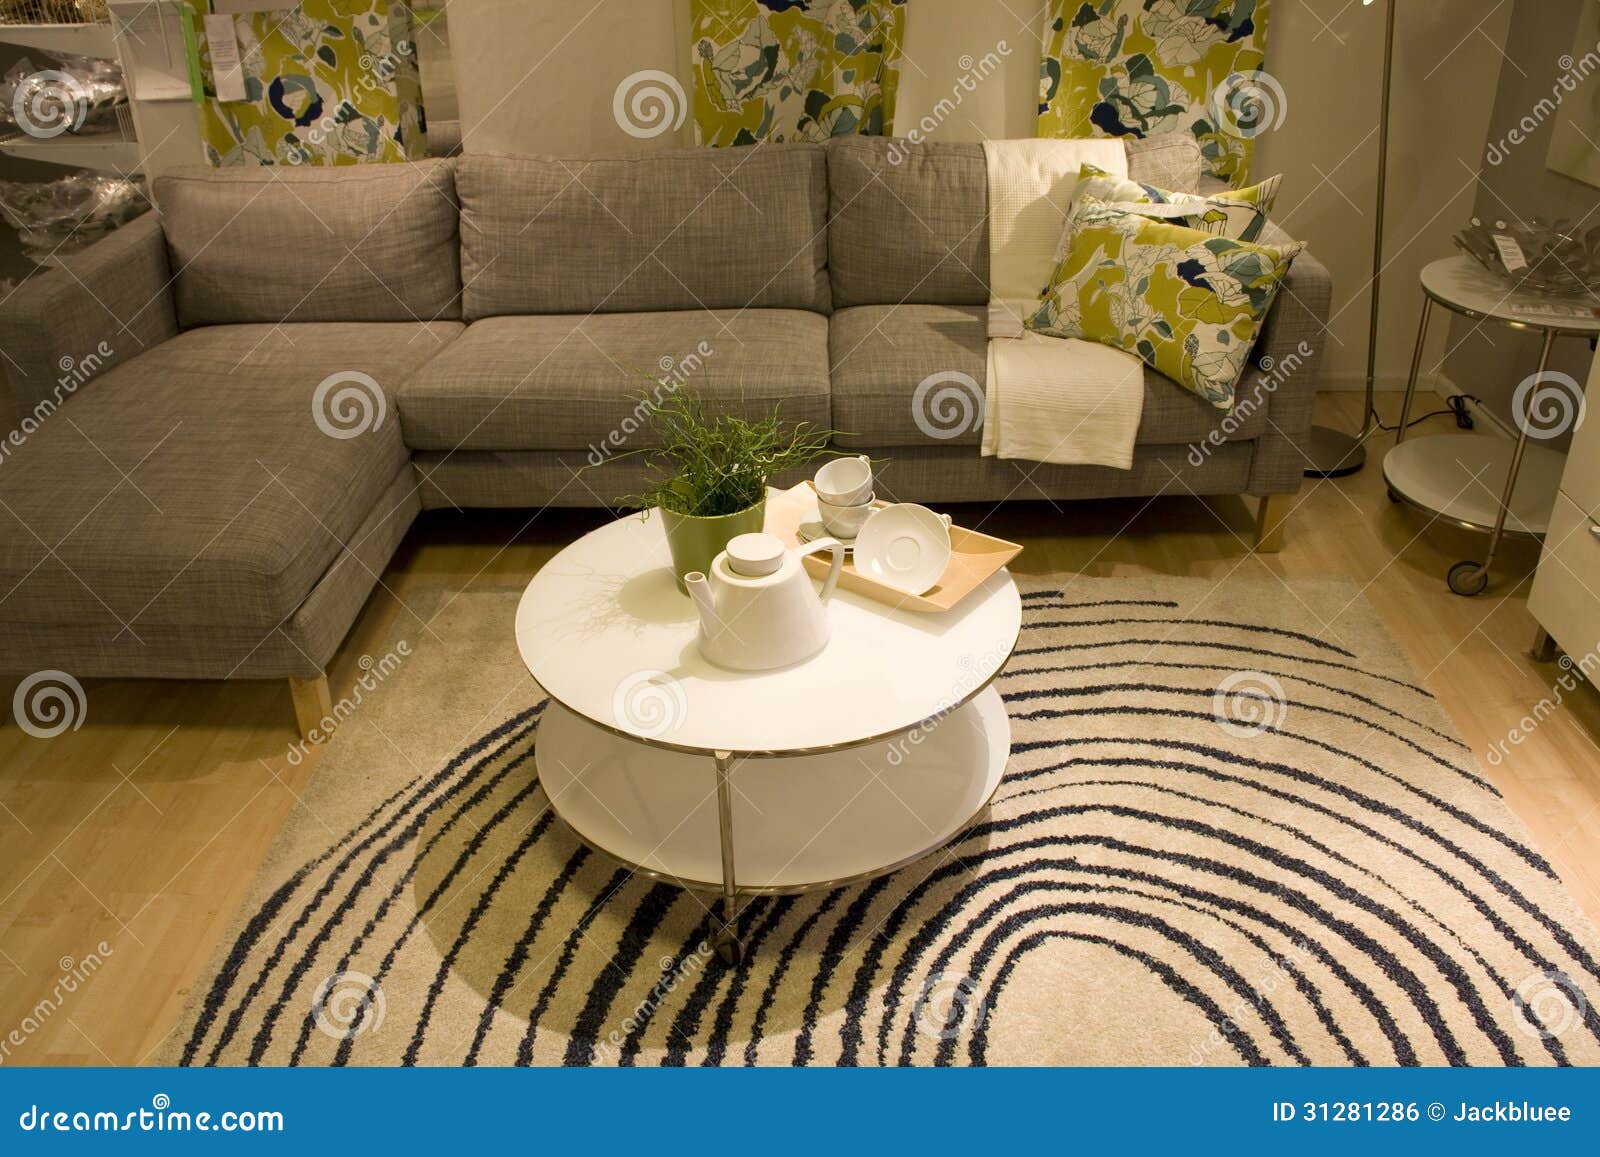 Furniture Store Stock Photo Image Of Interiors Coffee 31281286